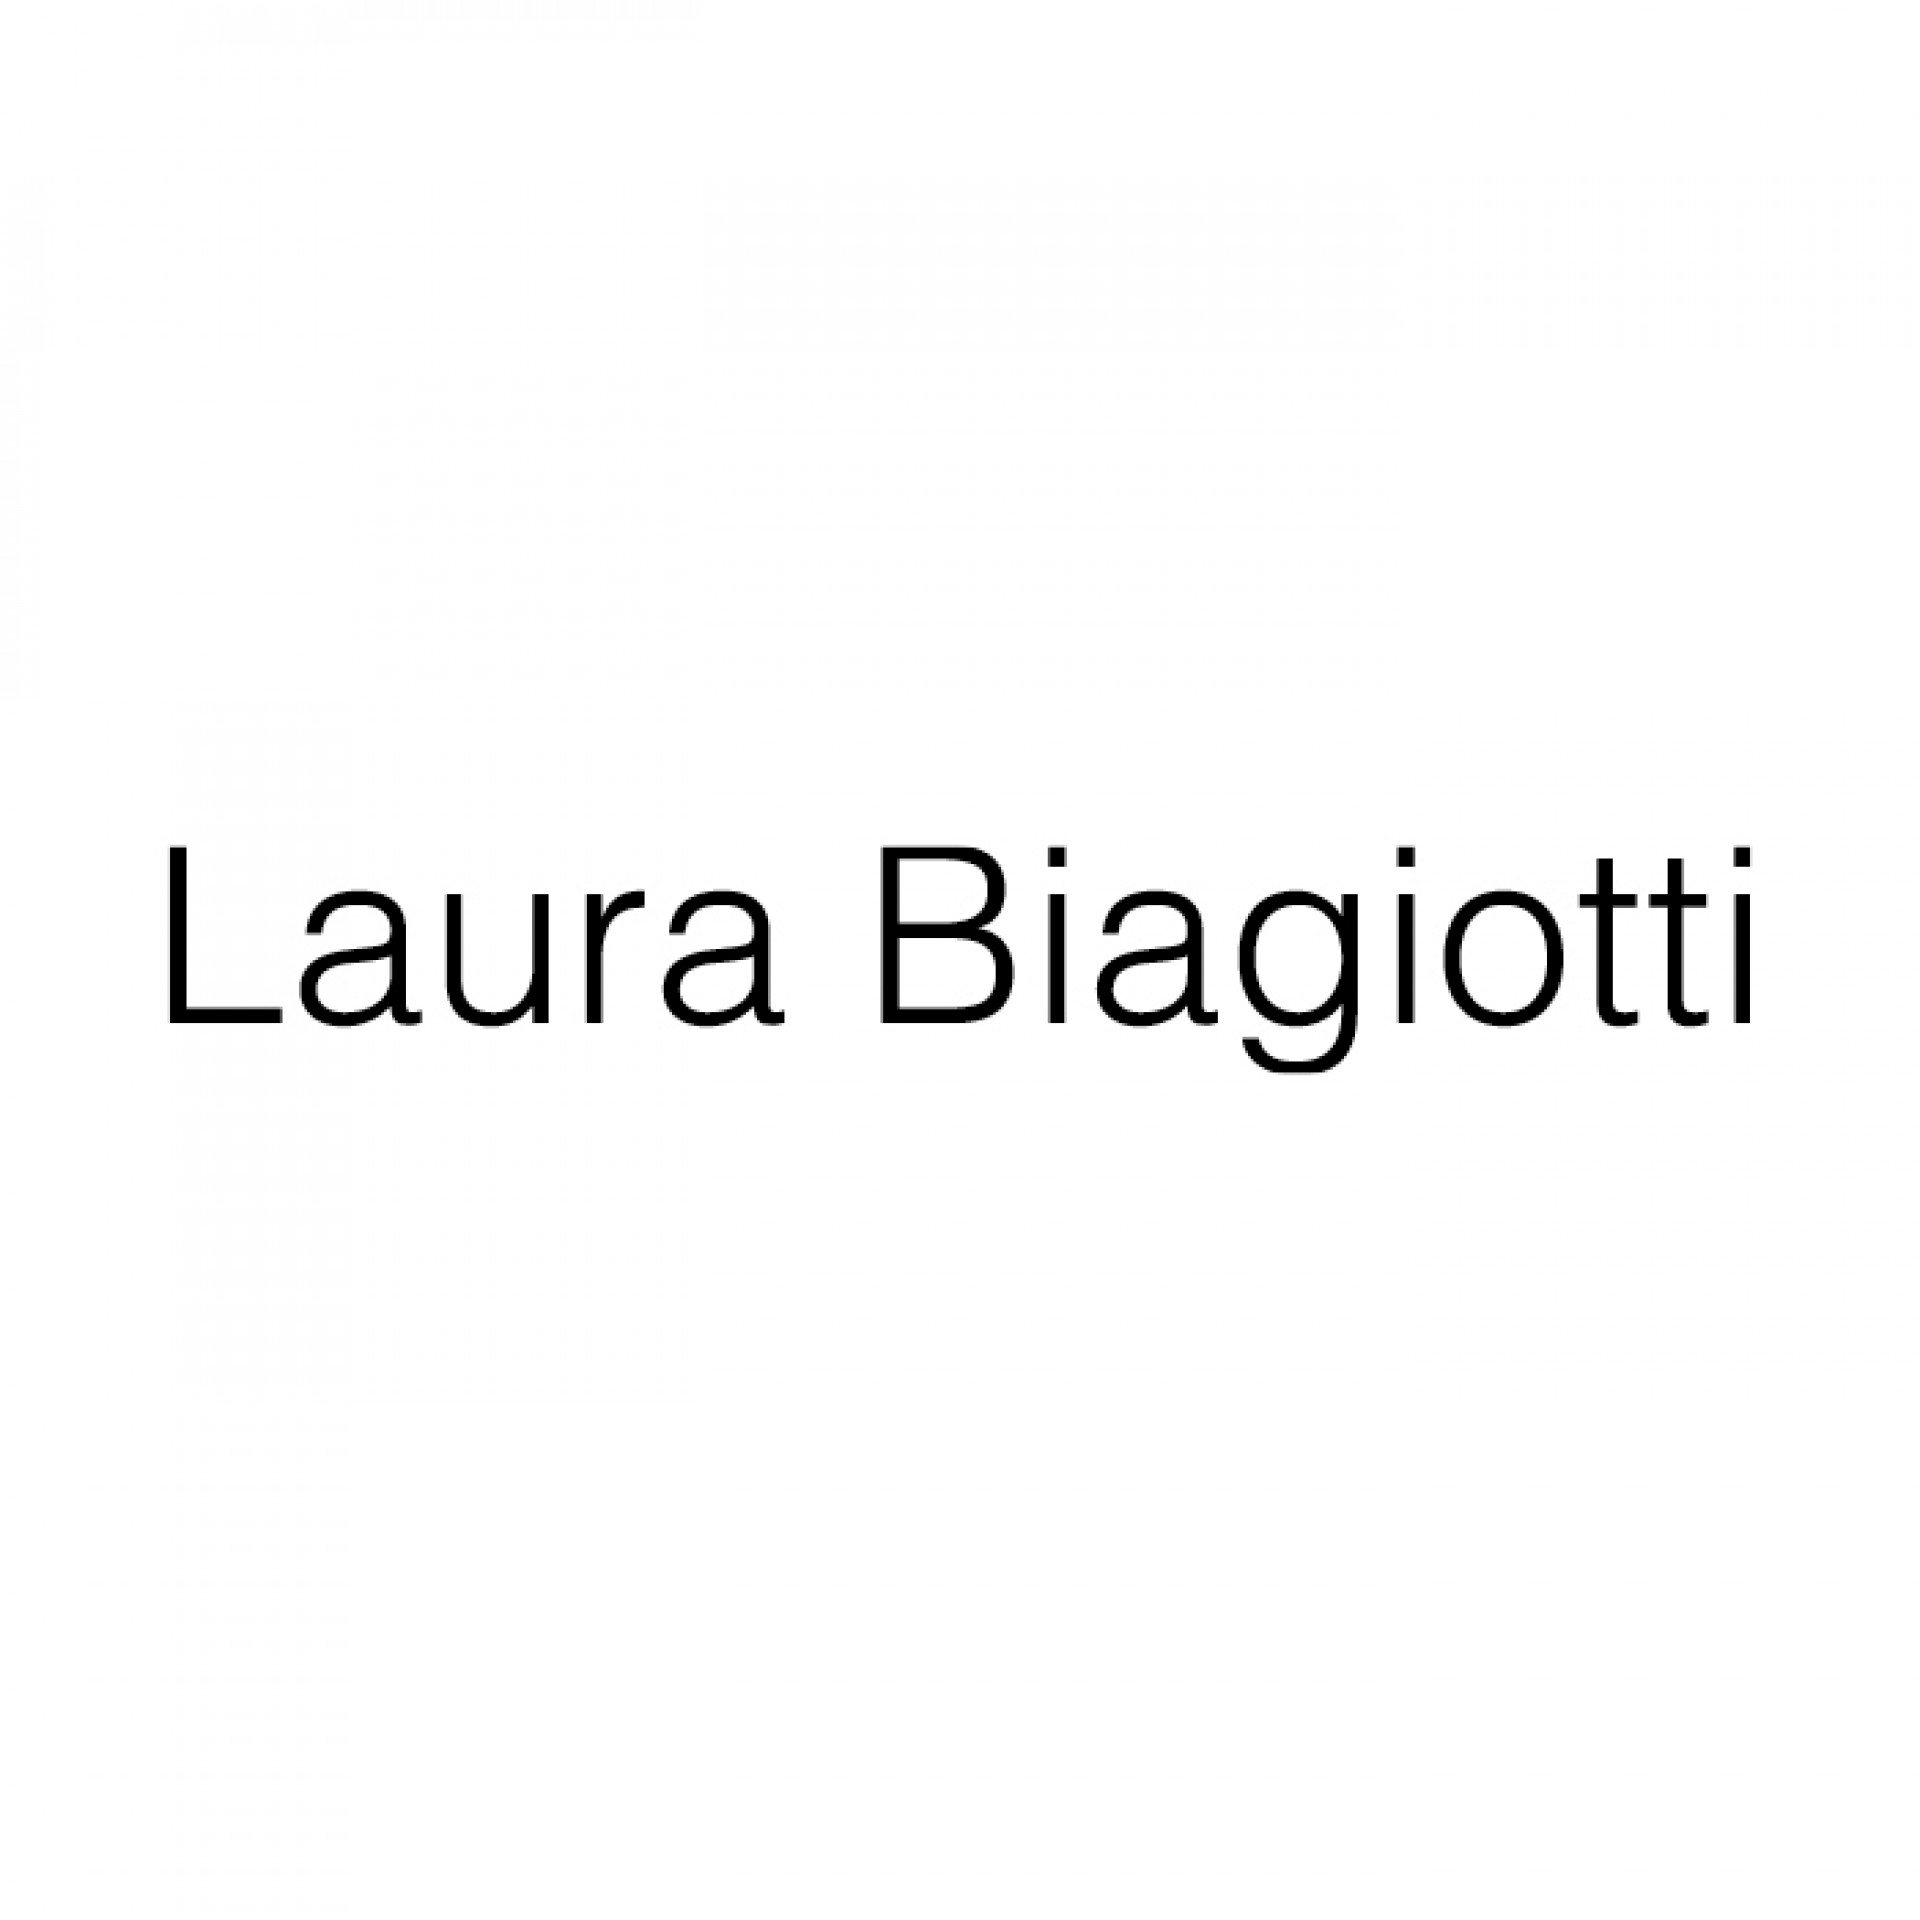 LAURA BIAGIOTTI_700X700_LOGO.jpg